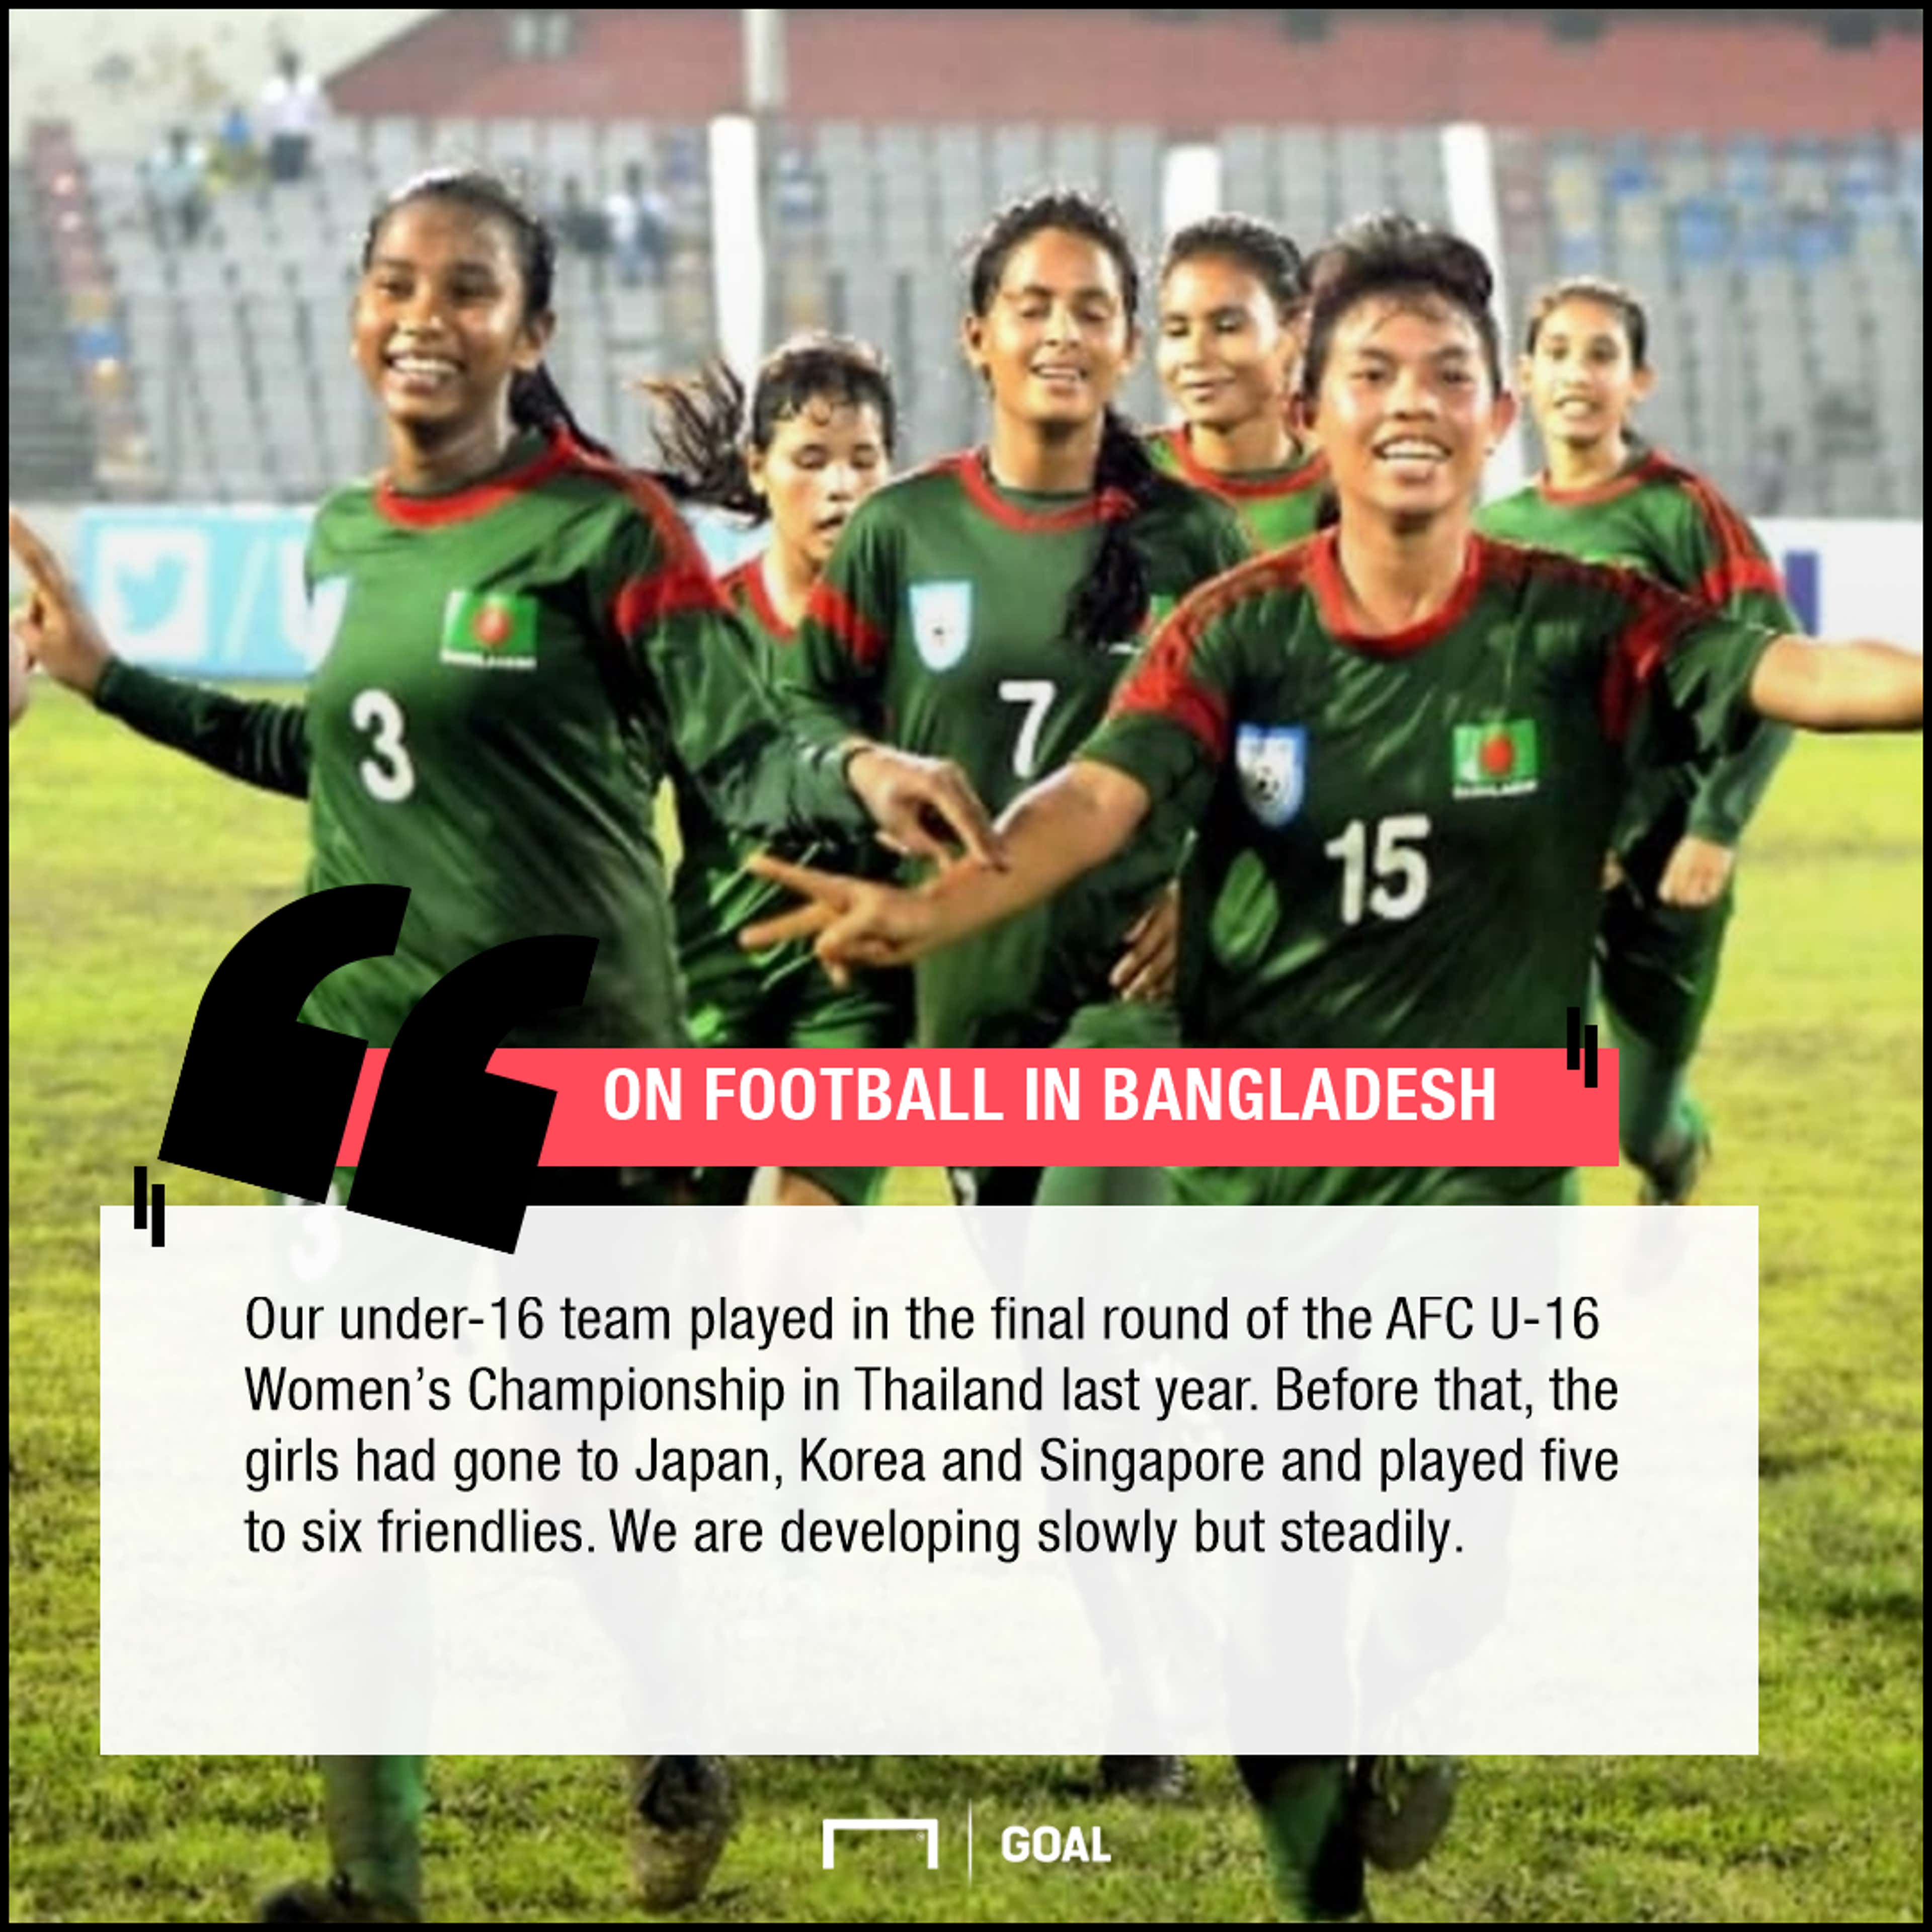 Sabina Khatun on women's football in Bangladesh